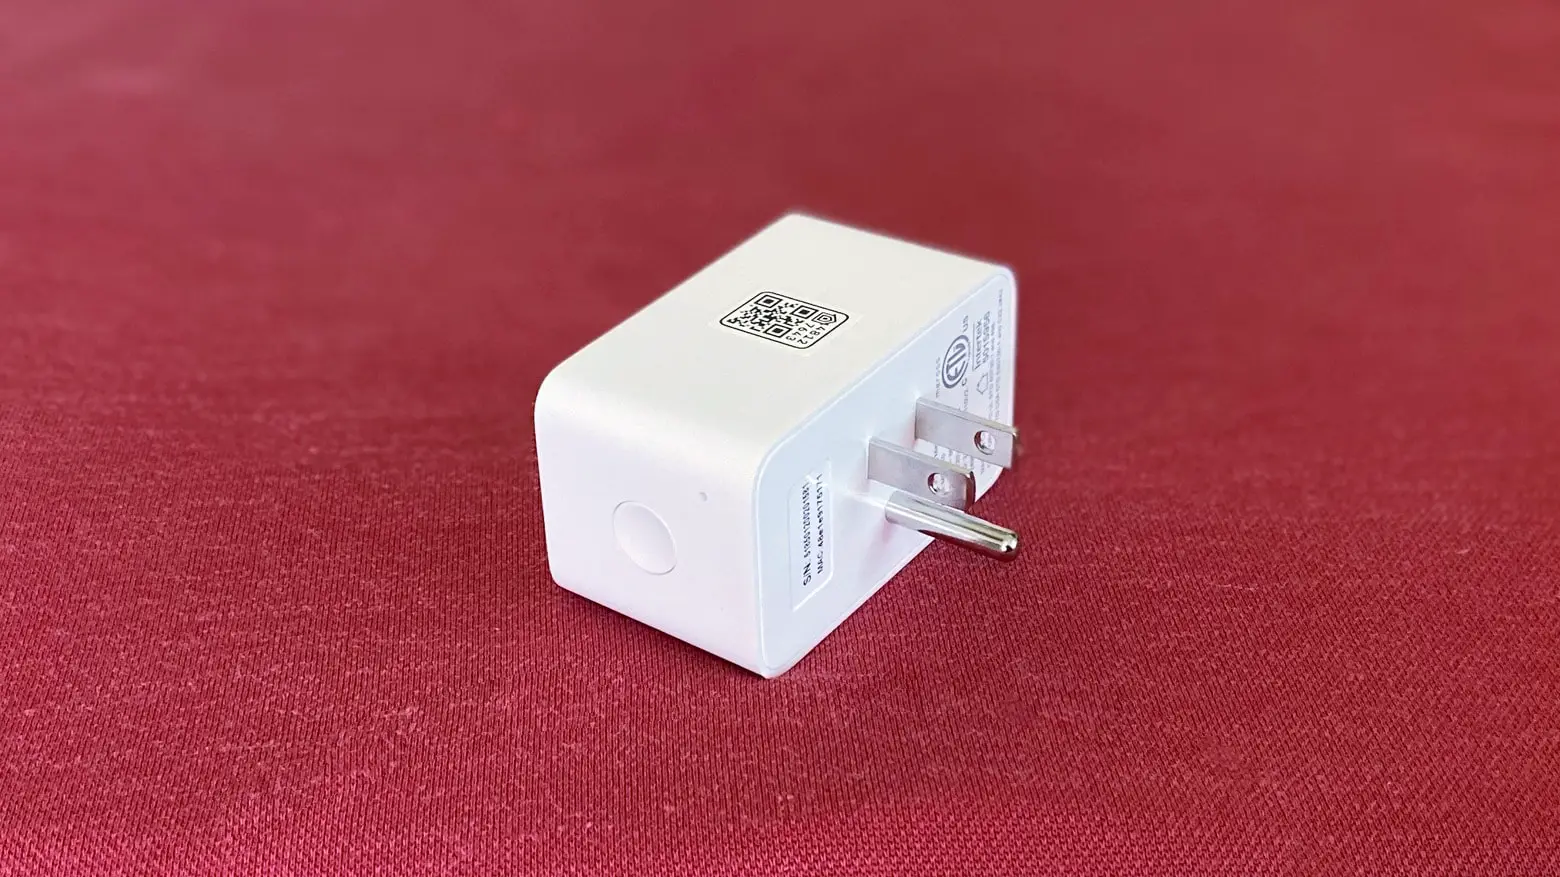 meross smart plug wont connect to wi-fi